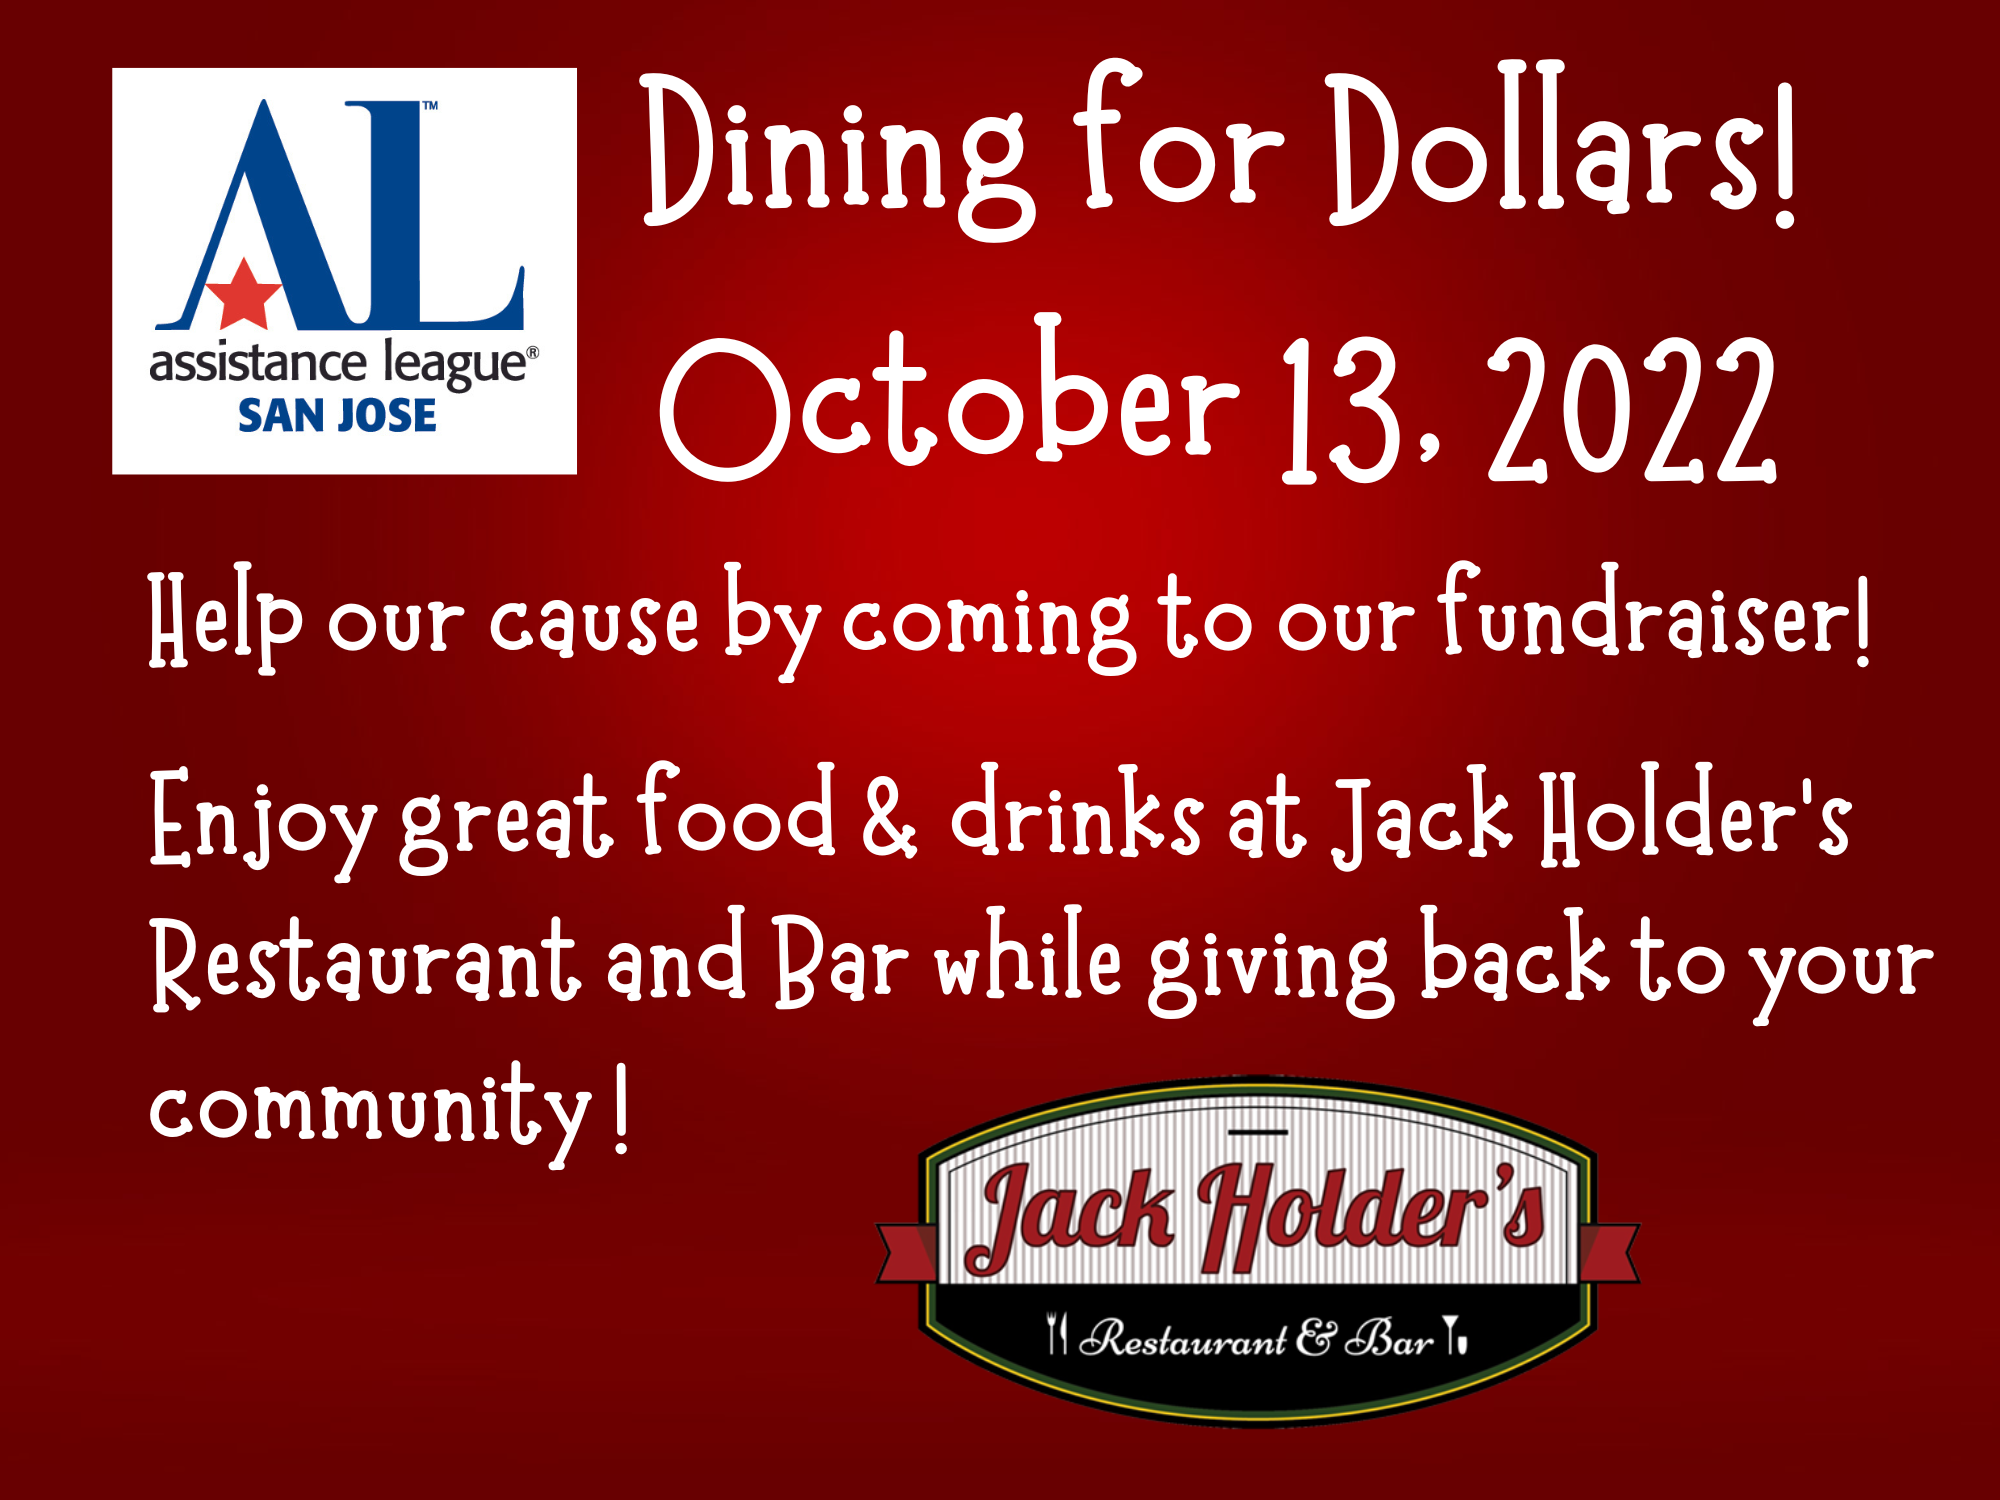 Dining for Dollars at Jack Holder's